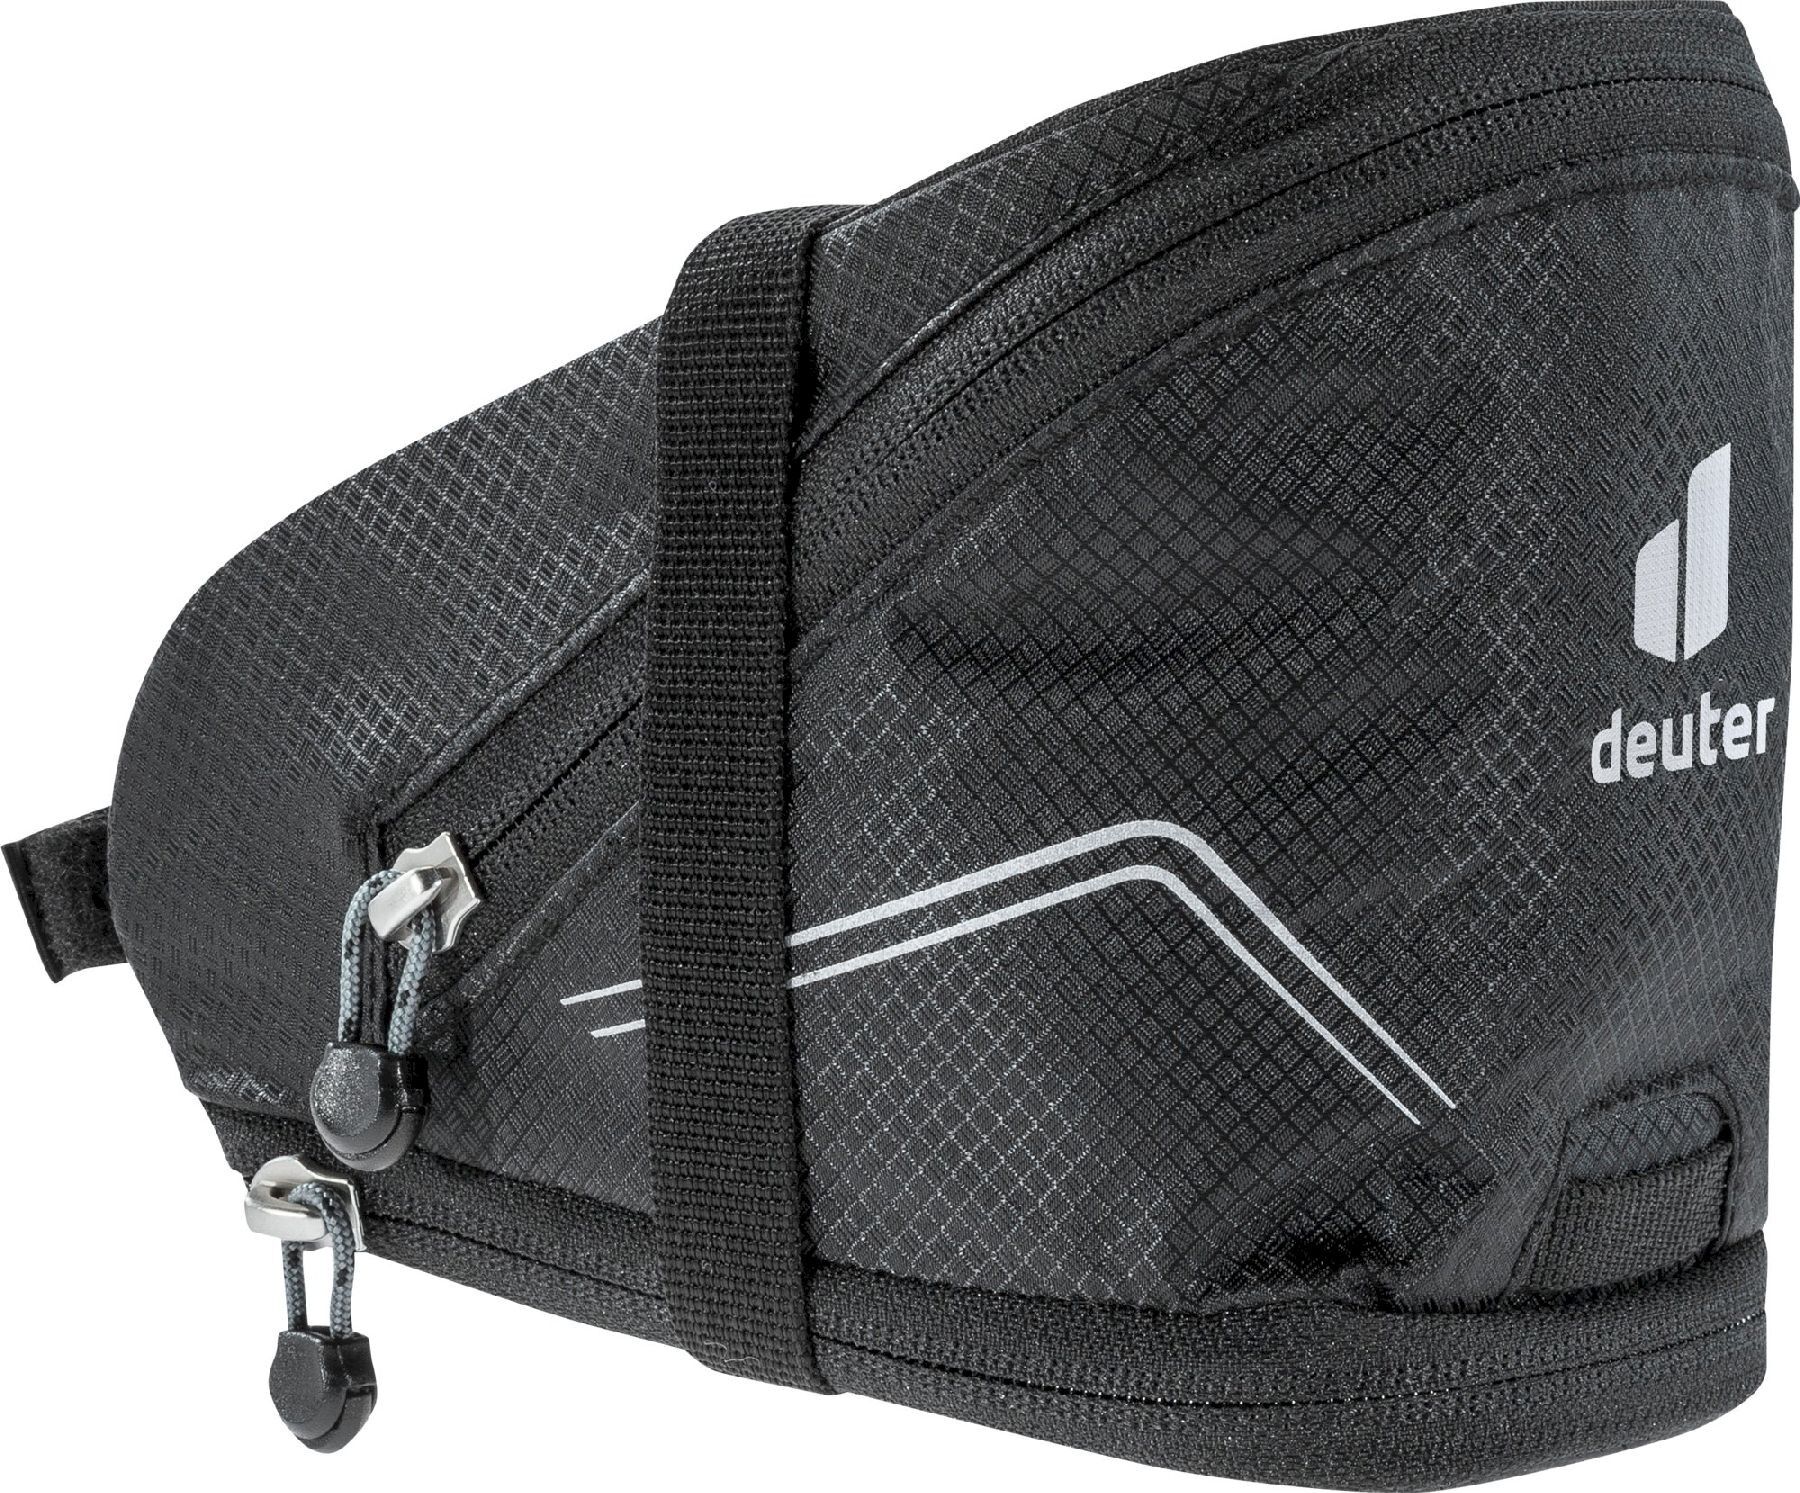 Deuter Bike Bag II - Bolsa herramientas bici